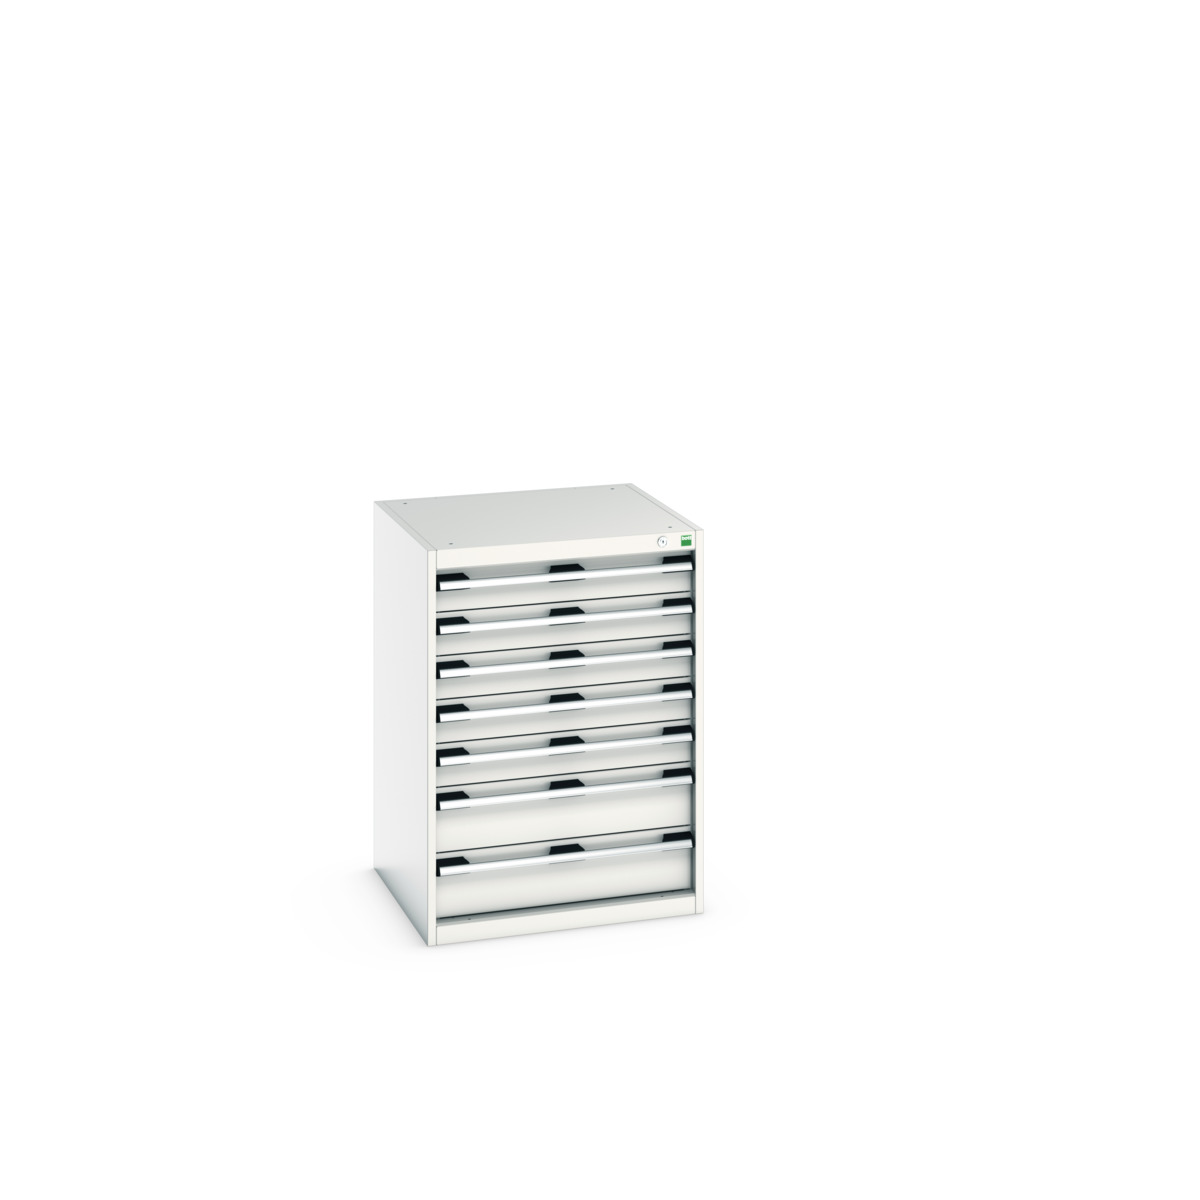 40019051.16V - cubio armoire à tiroirs SL-669-7.1